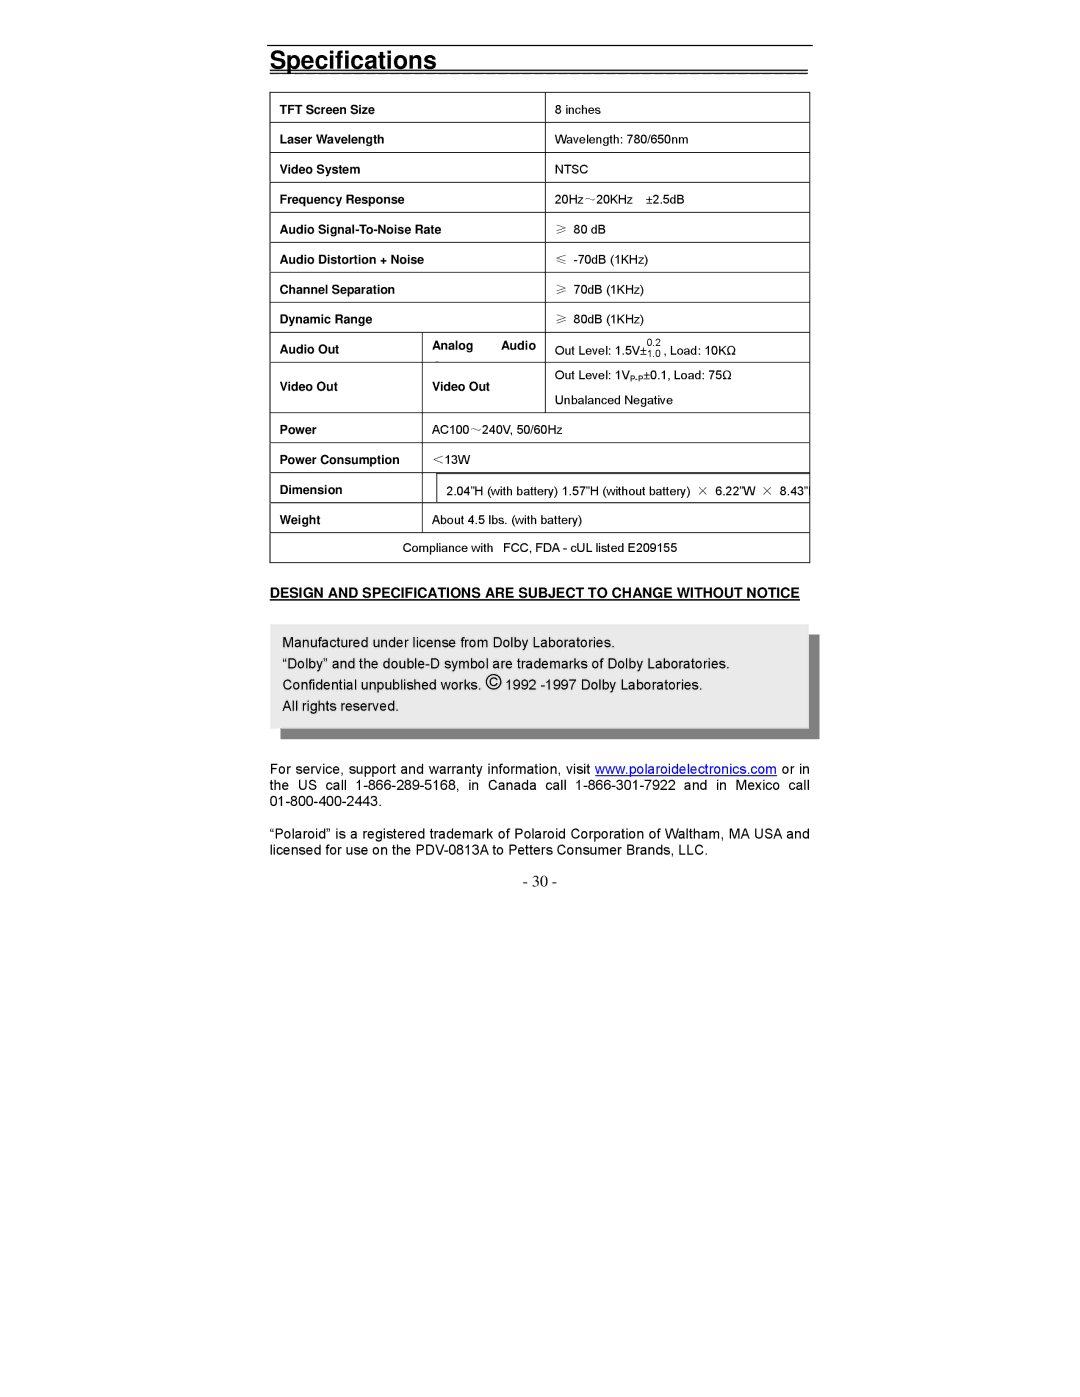 Polaroid PDV-0813A operation manual Specifications 